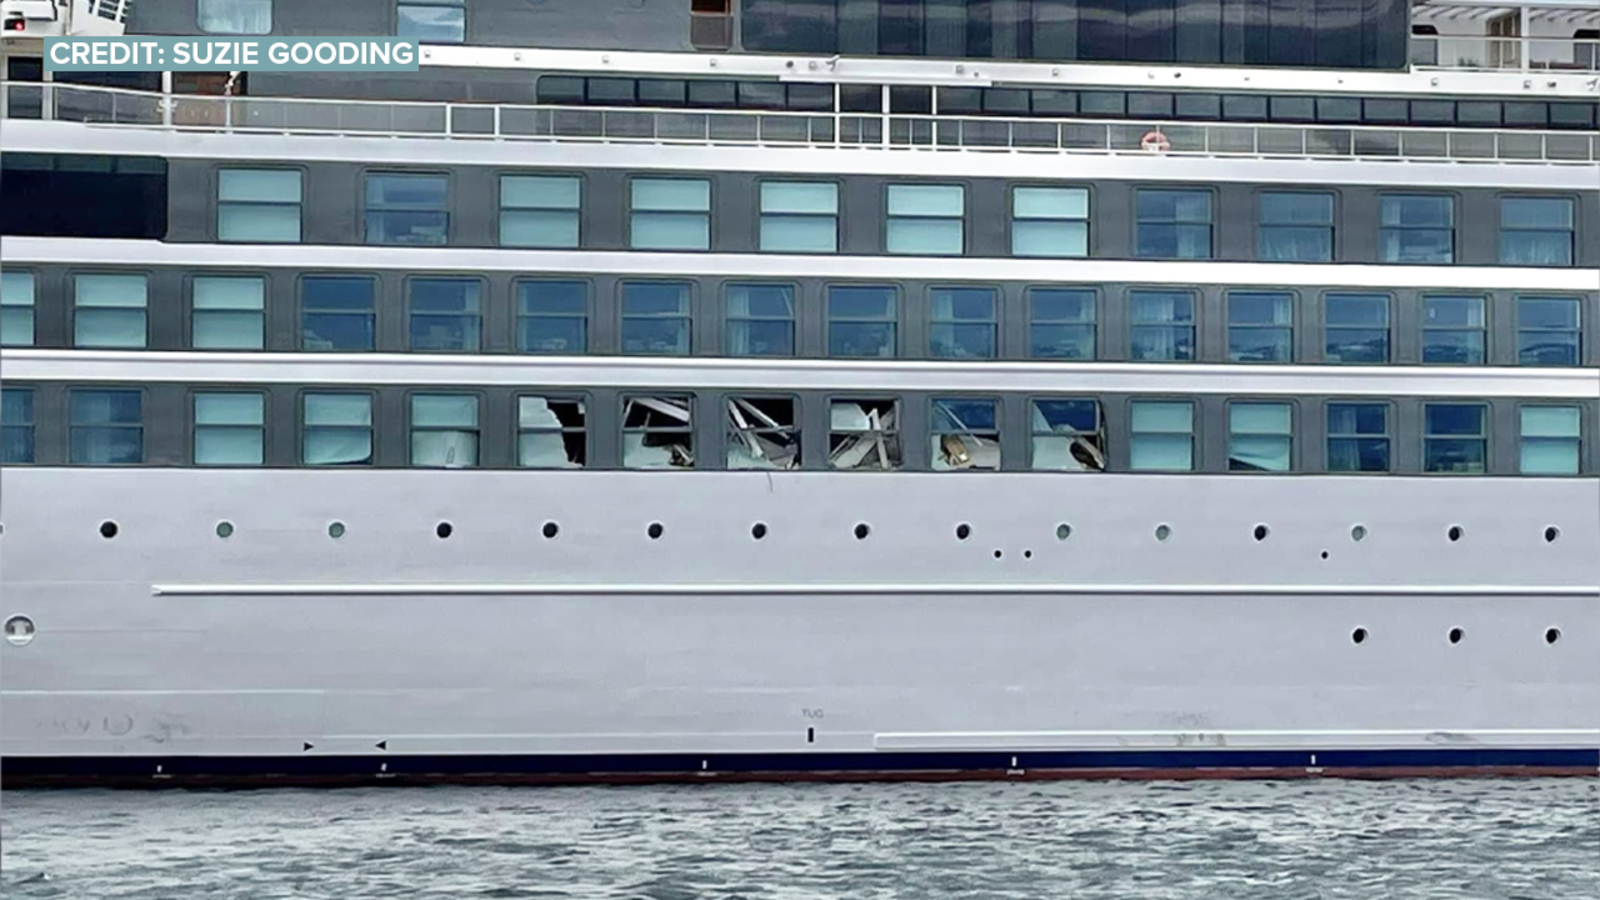 cruise ship 1 dead 4 injured